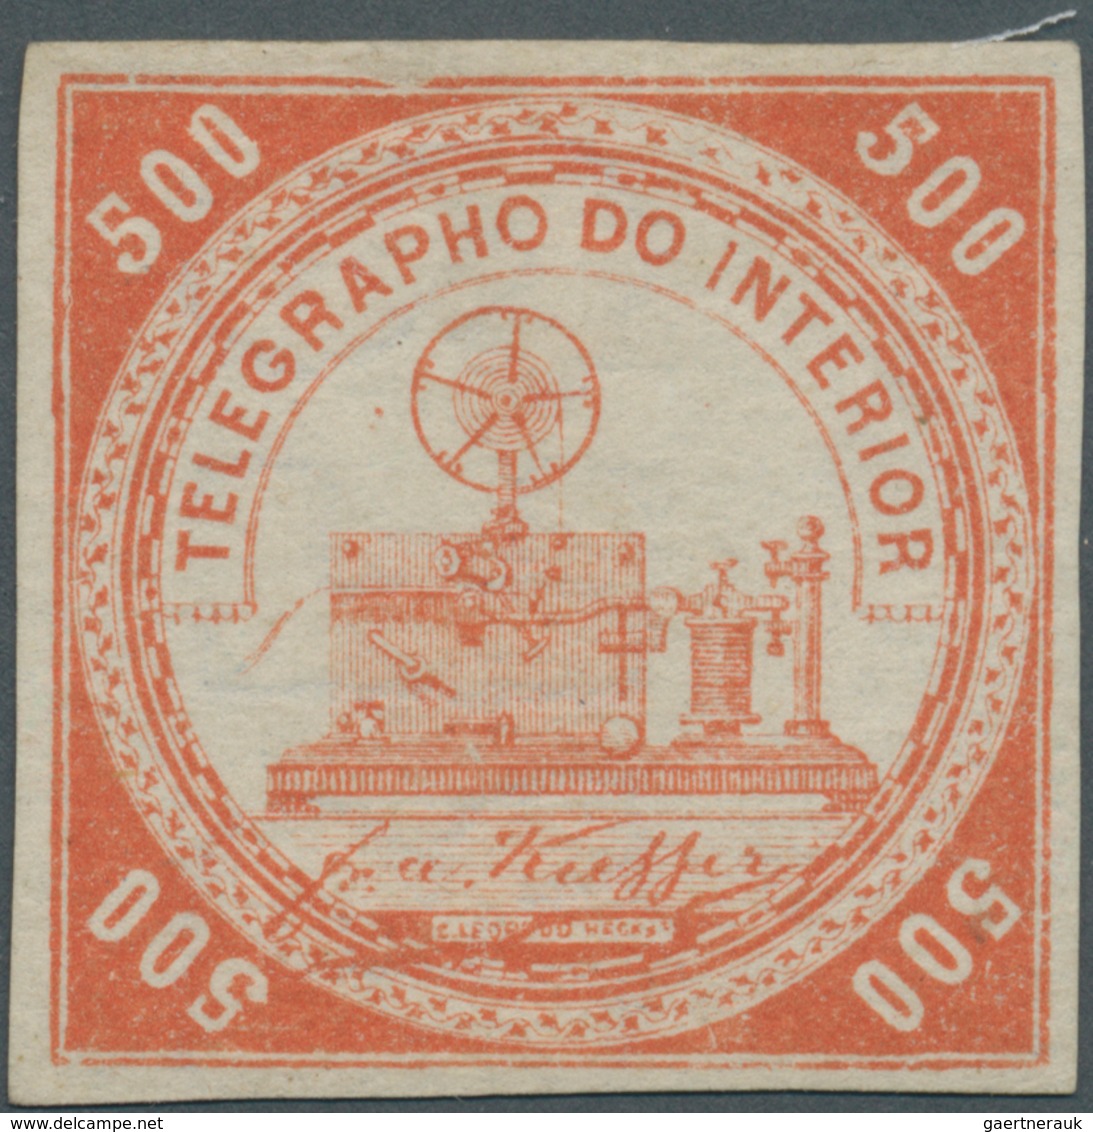 00587 Brasilien - Telegrafenmarken: 1873, 500r. Vermilion, Wm "Lacroix Freres", Fresh Colour, Full Margins - Telegrafo